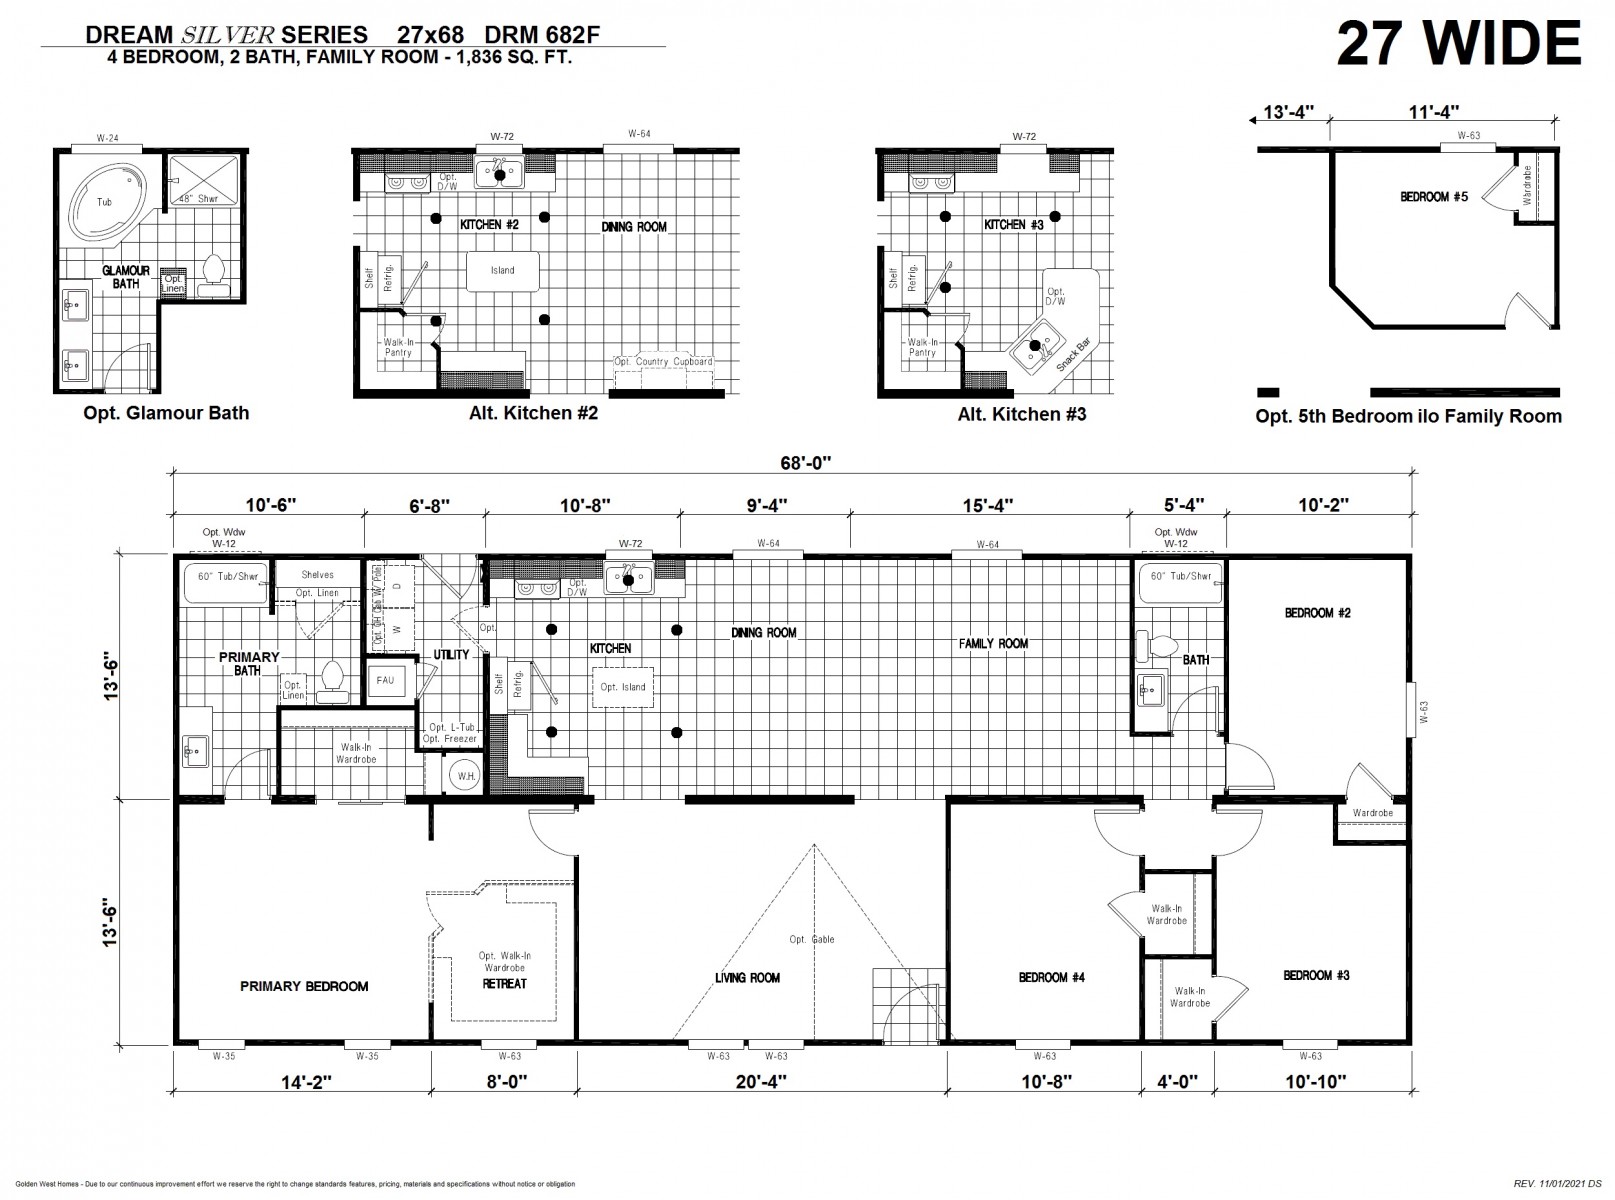 Homes Direct Modular Homes - Model DRM682F - Floorplan